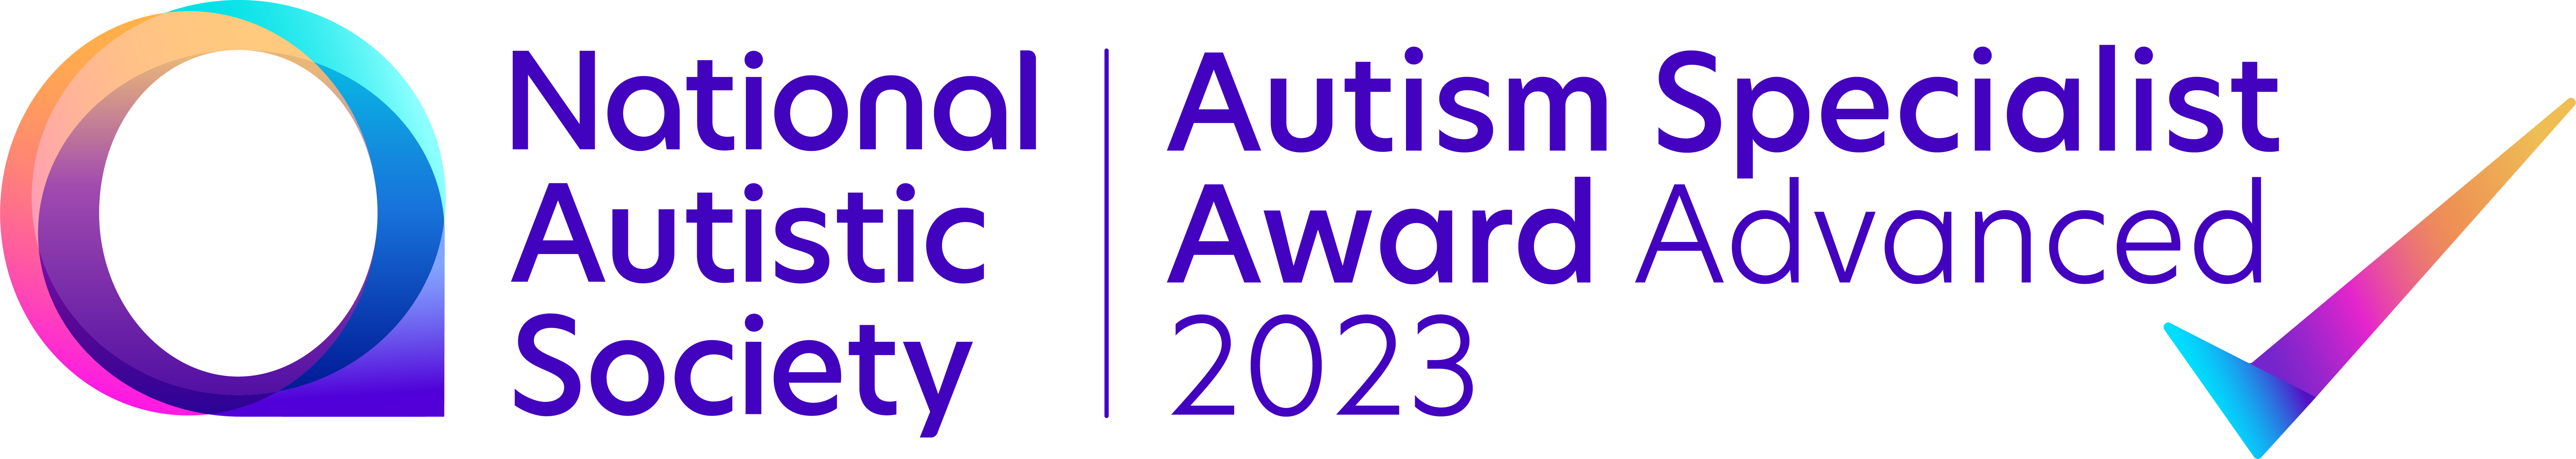 NAS Autism Specialist Award Advanced 2023